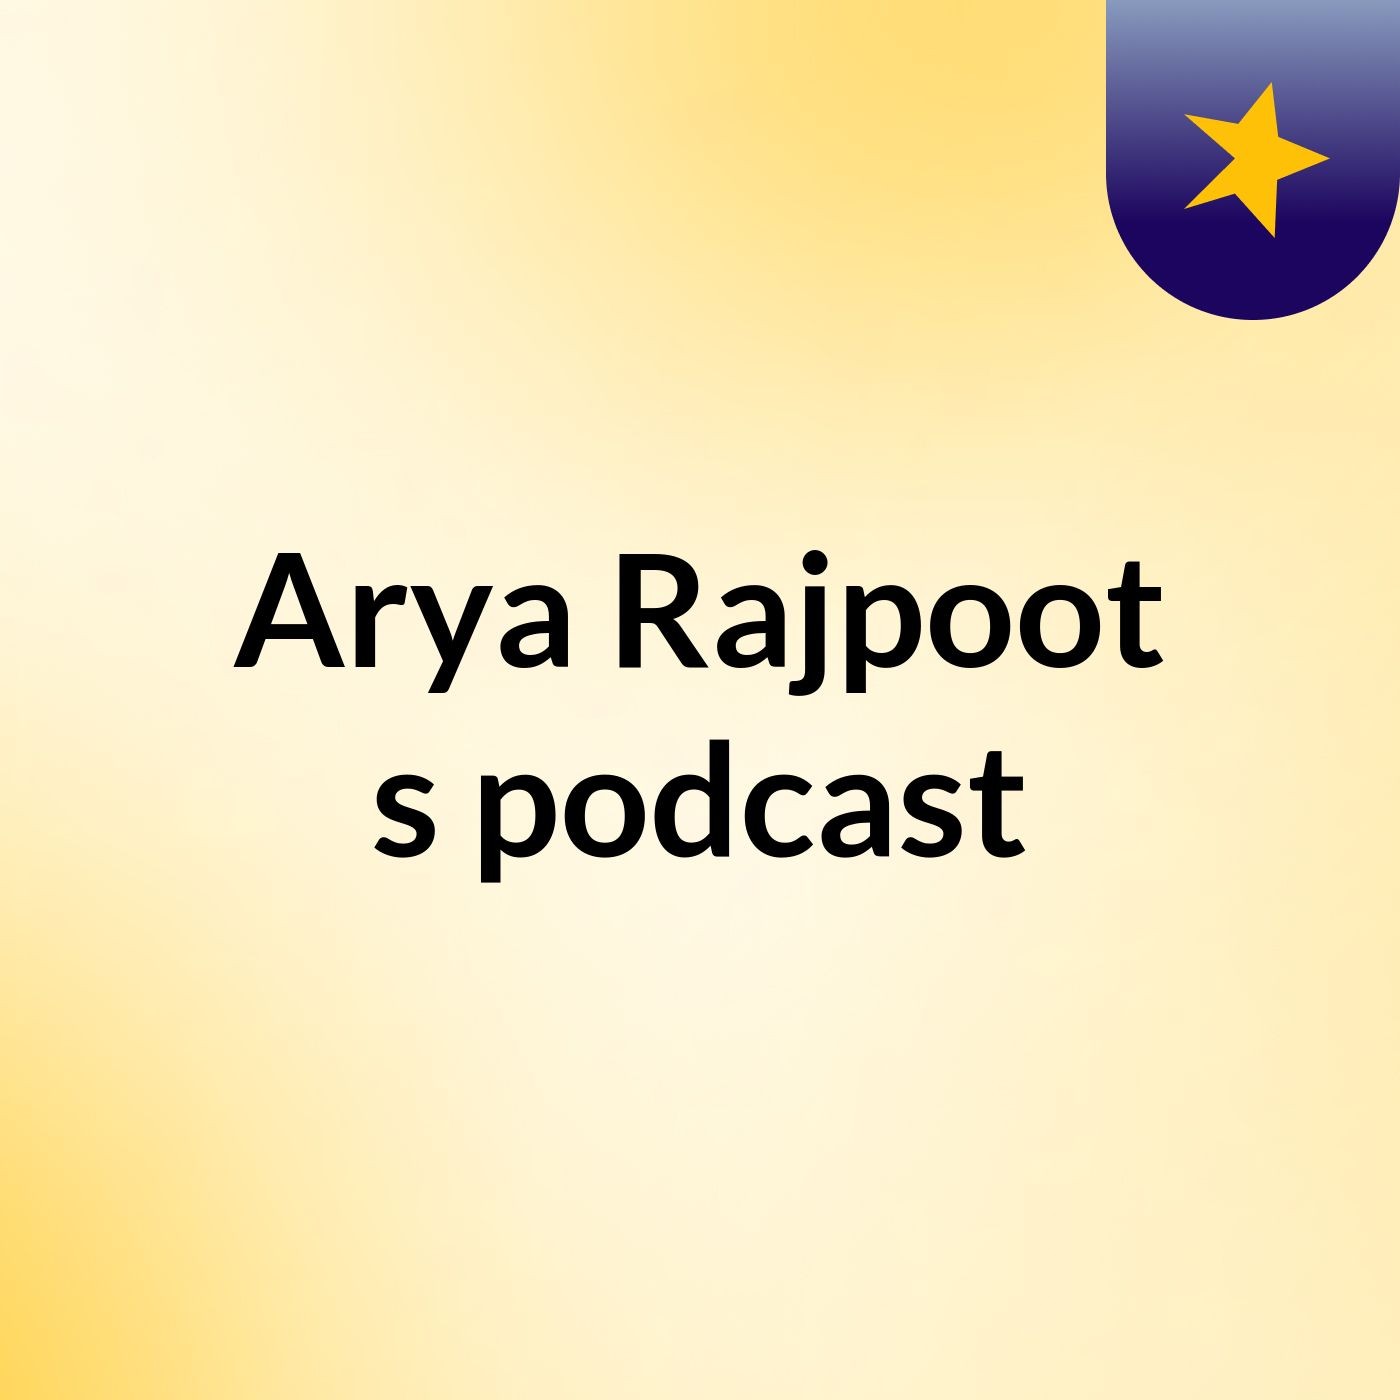 Arya Rajpoot's podcast